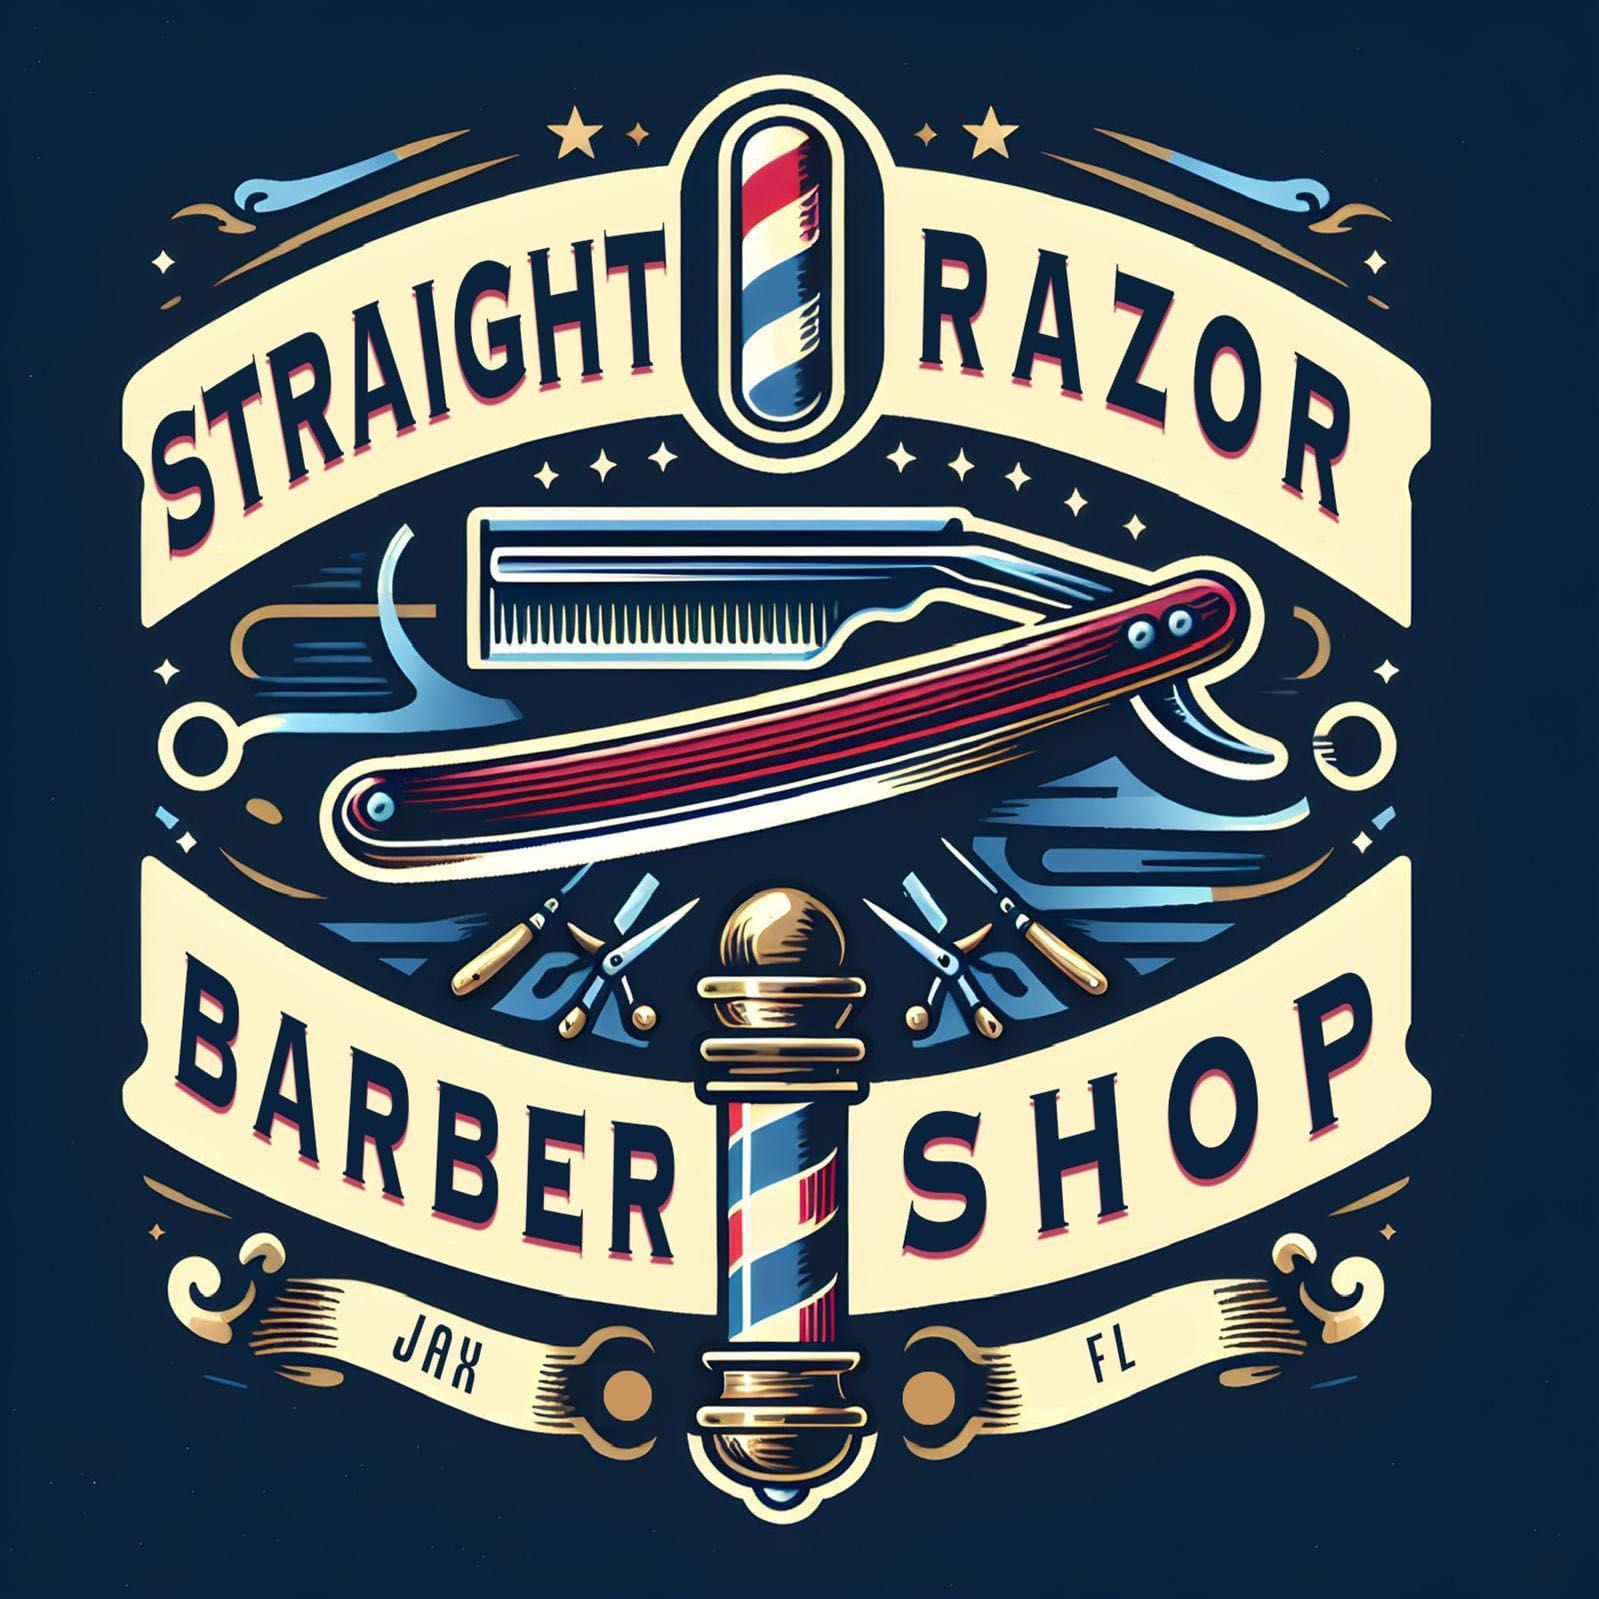 Straight Razor Hair Salon, 9840 Old Baymeadows Rd., Jacksonville, 32256